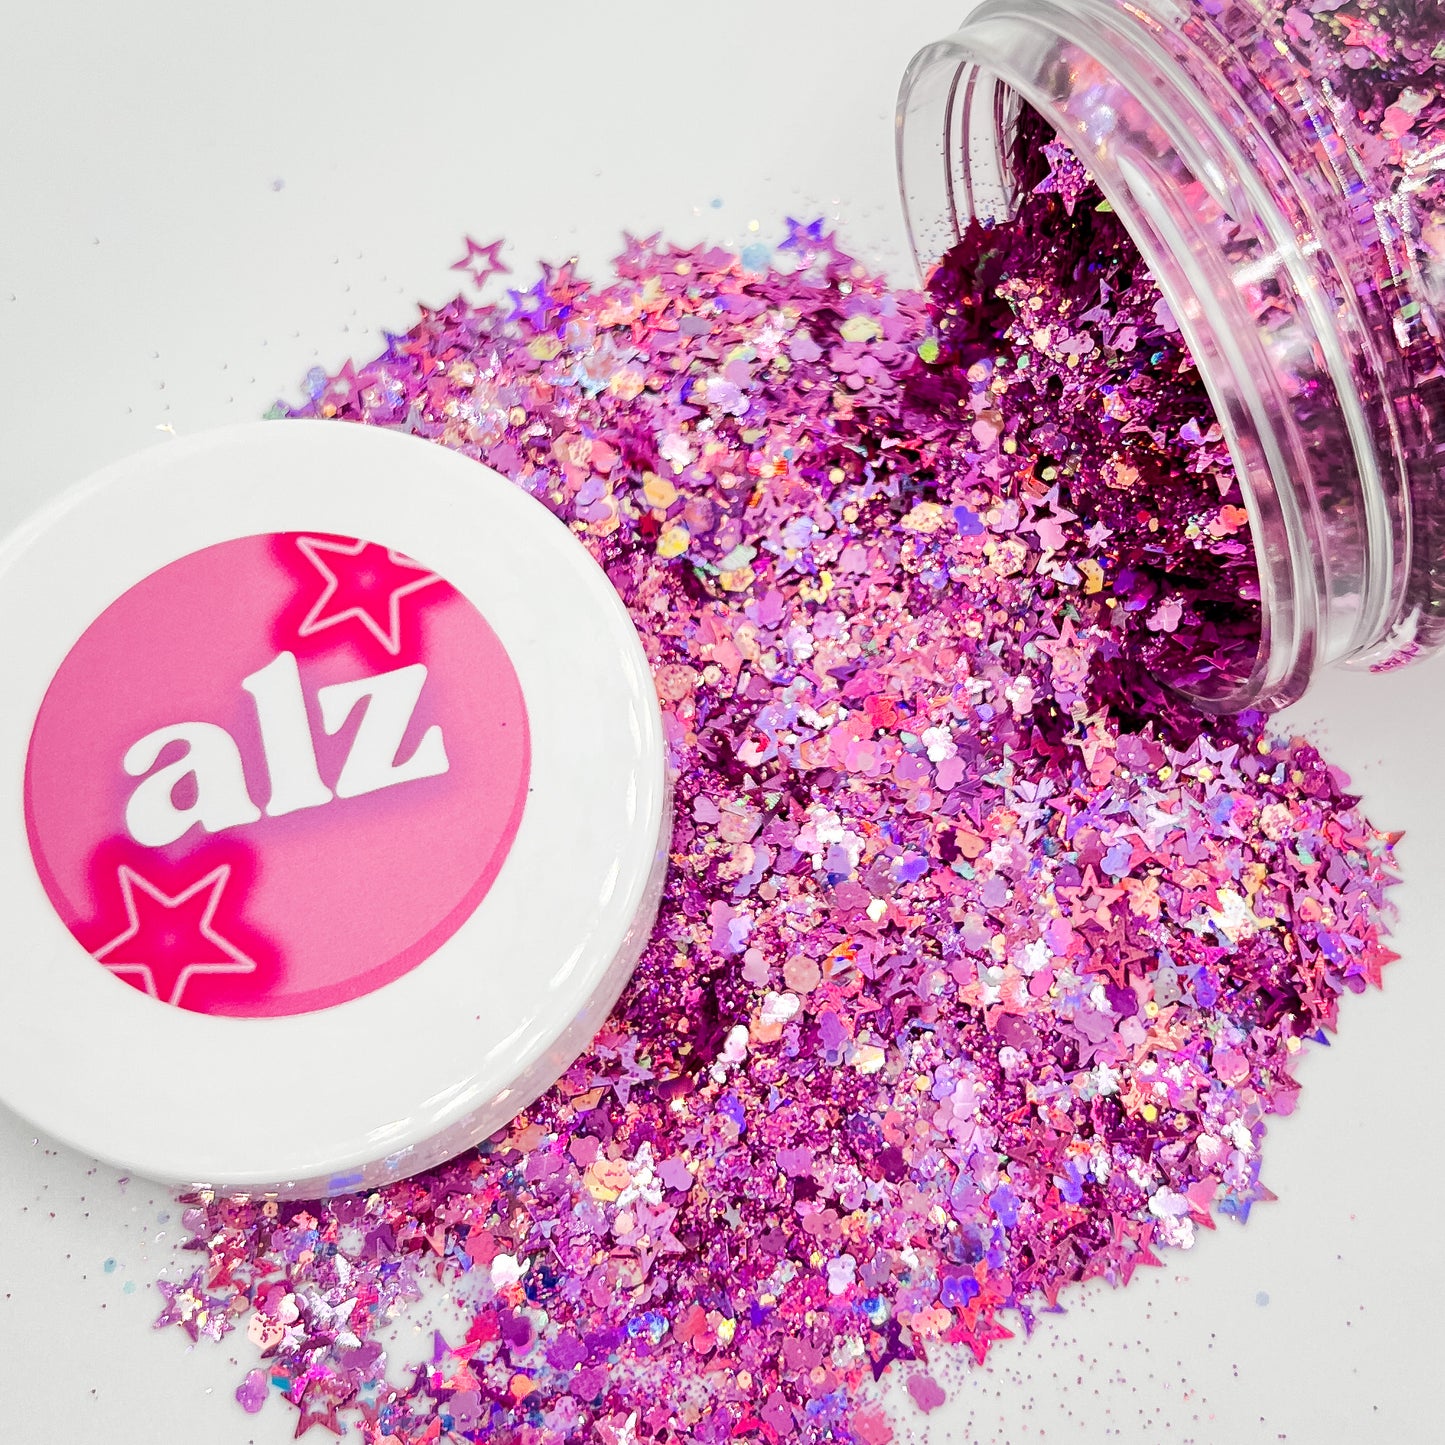 'Alz' Chunky Glitter